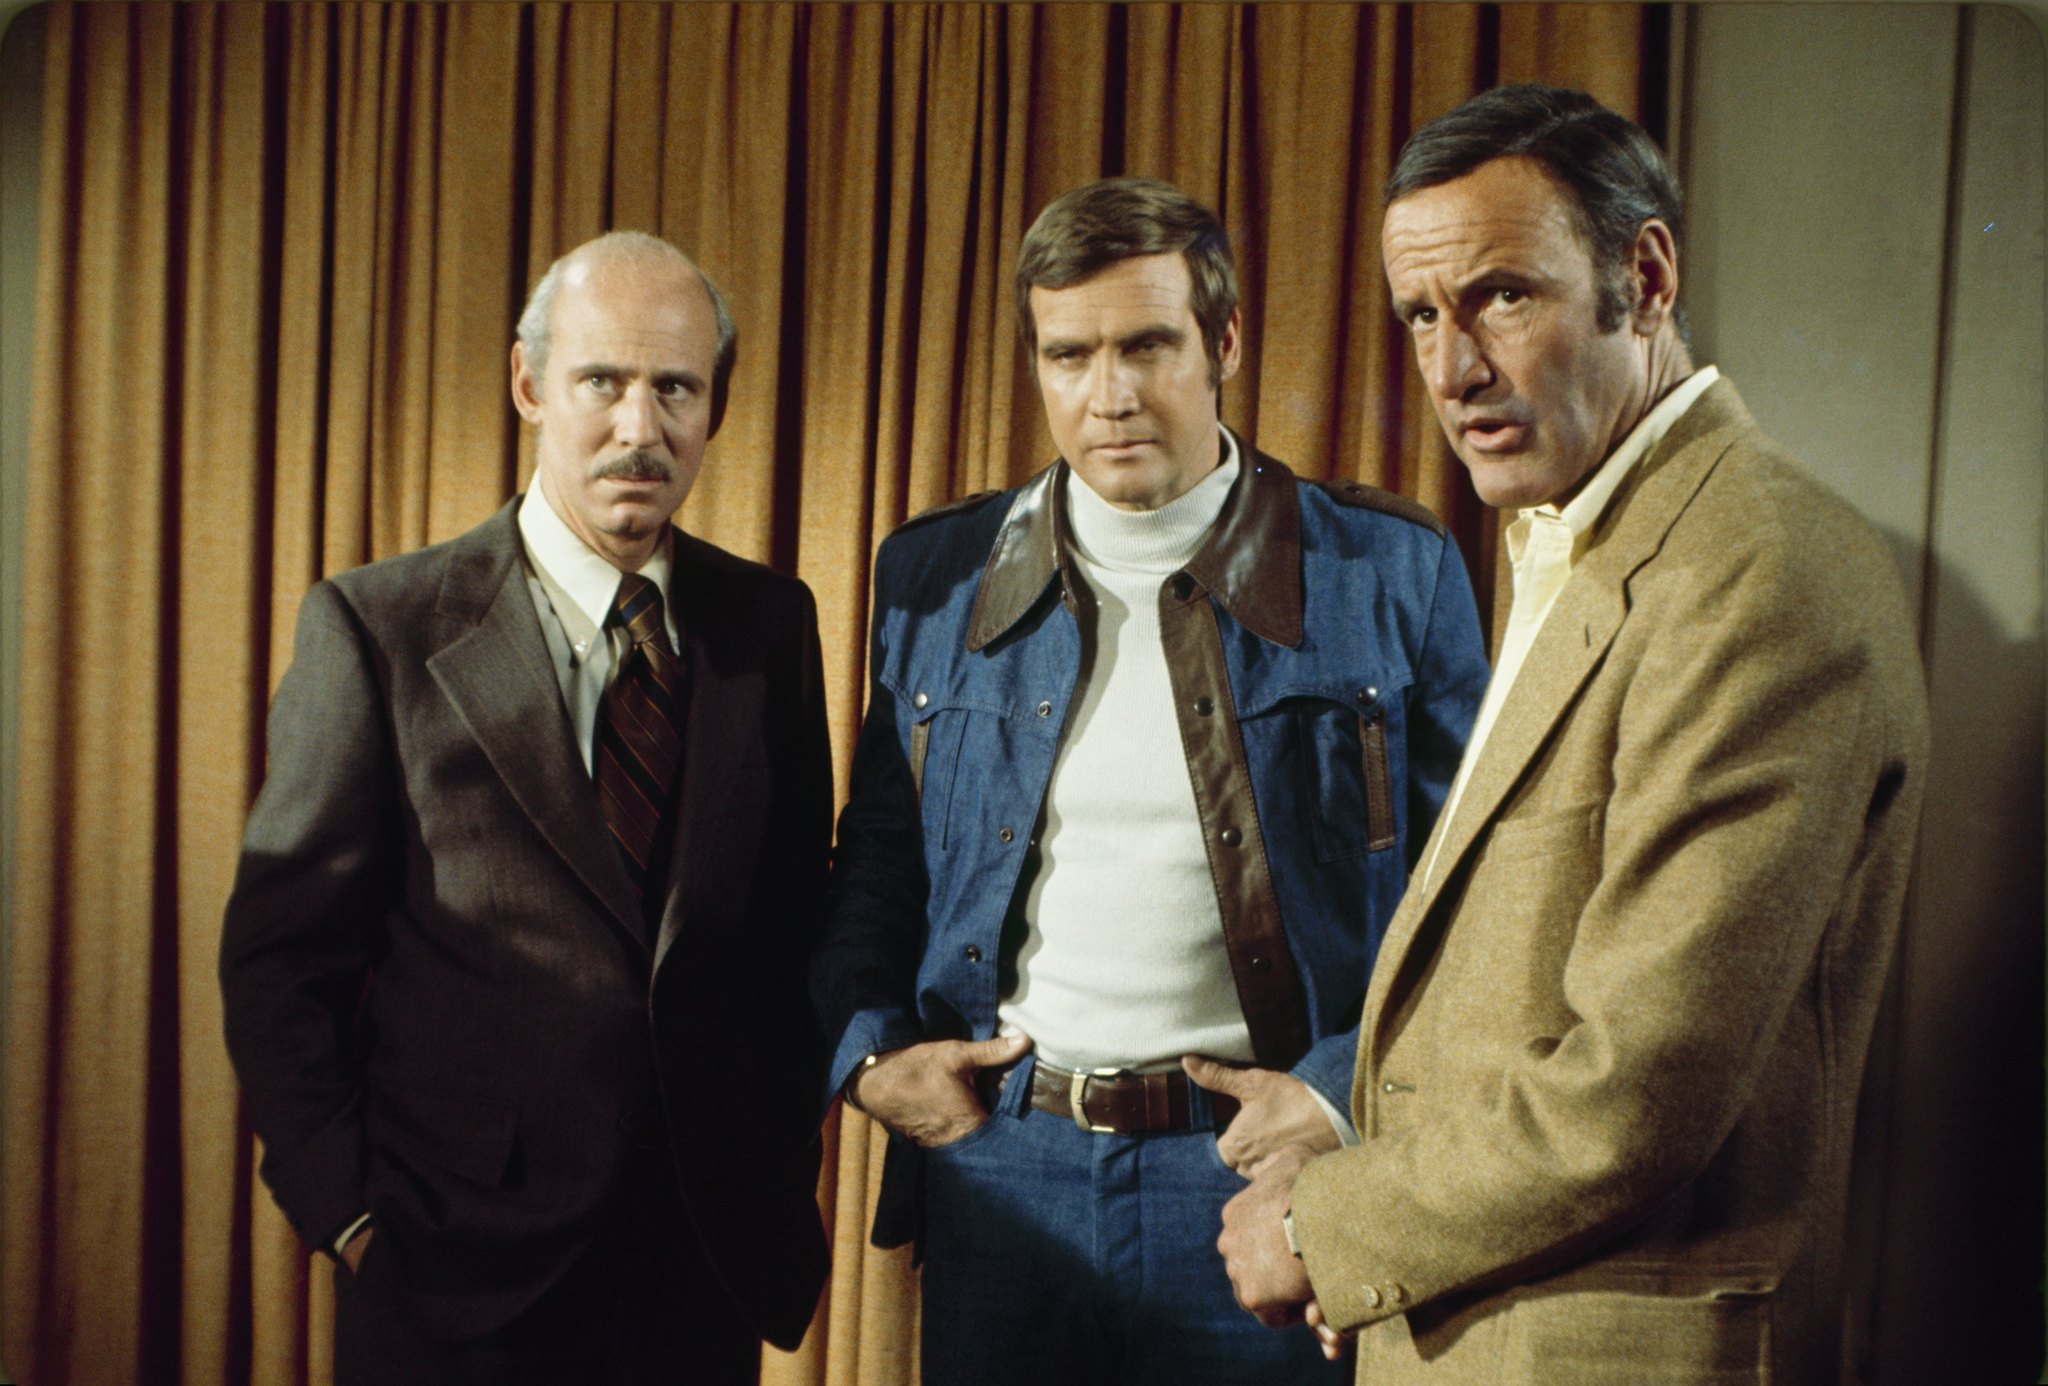 Still of Lee Majors, Richard Anderson and Alan Oppenheimer in The Six Million Dollar Man (1974)